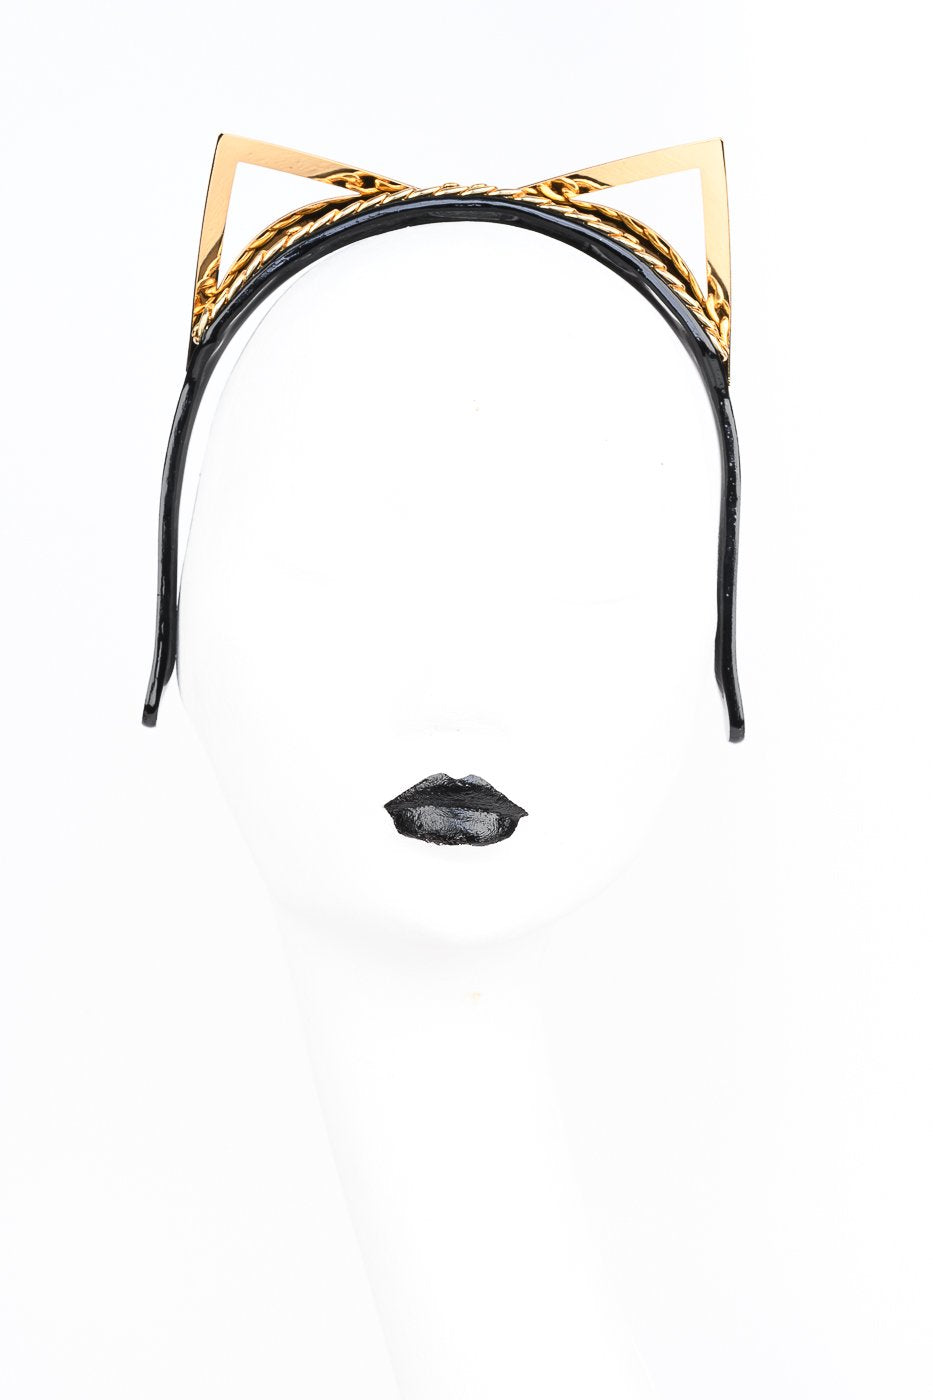 Kitten Ear Rica Headband in Black and Gold by Fraulein Kink